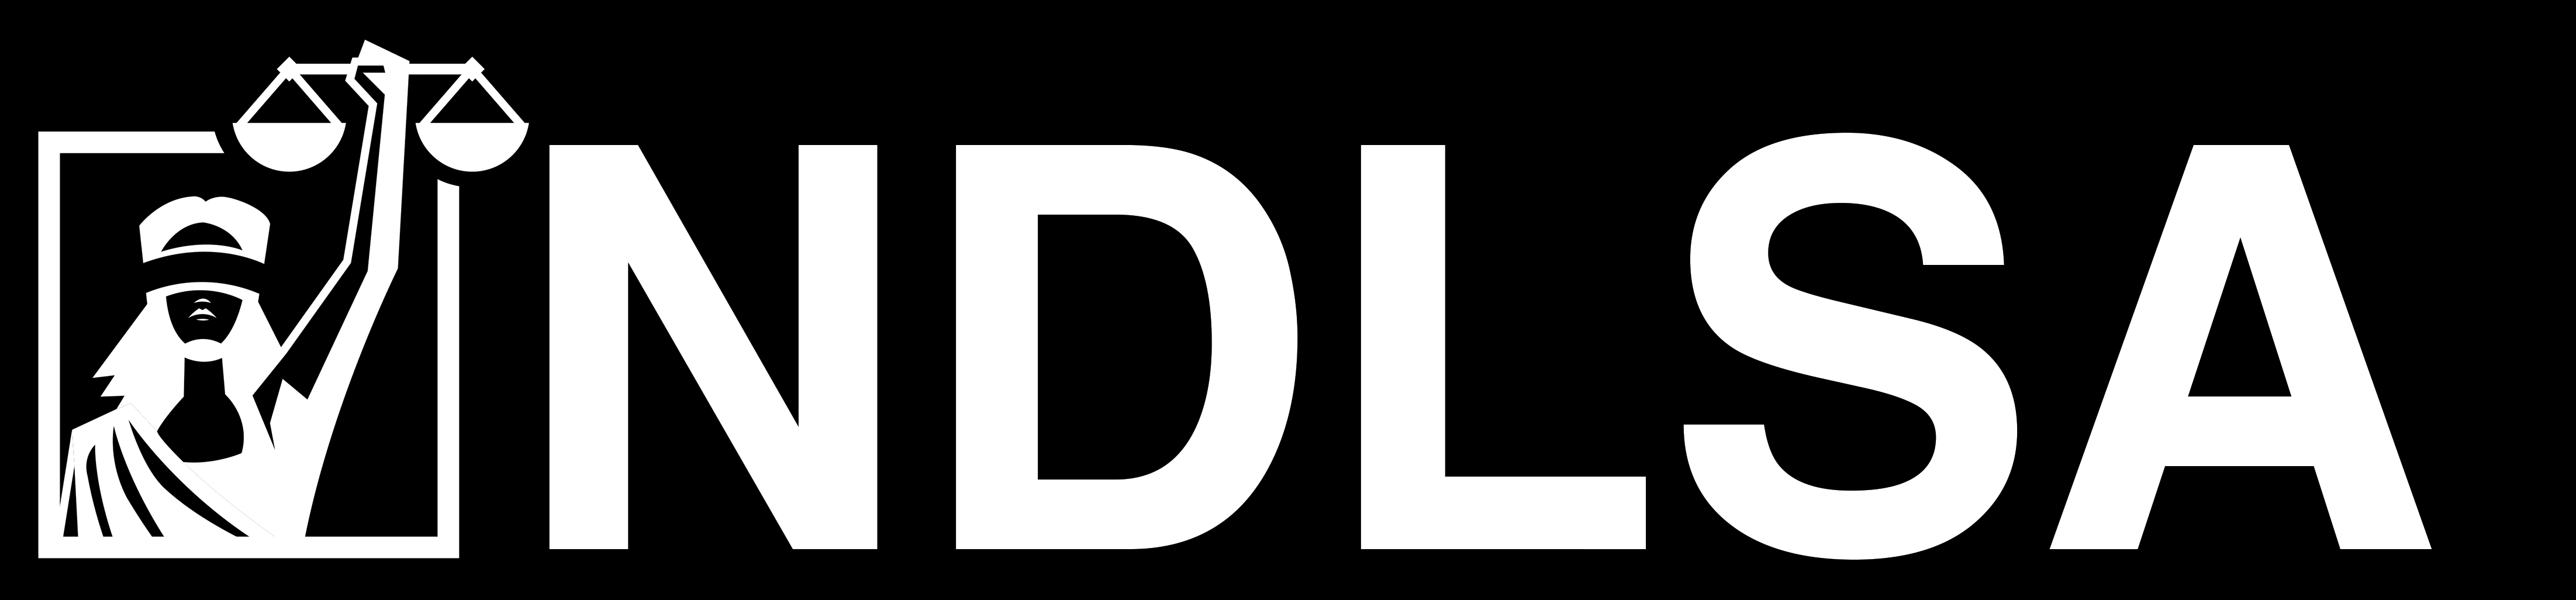 NDLSA Logo White Type on Black Background